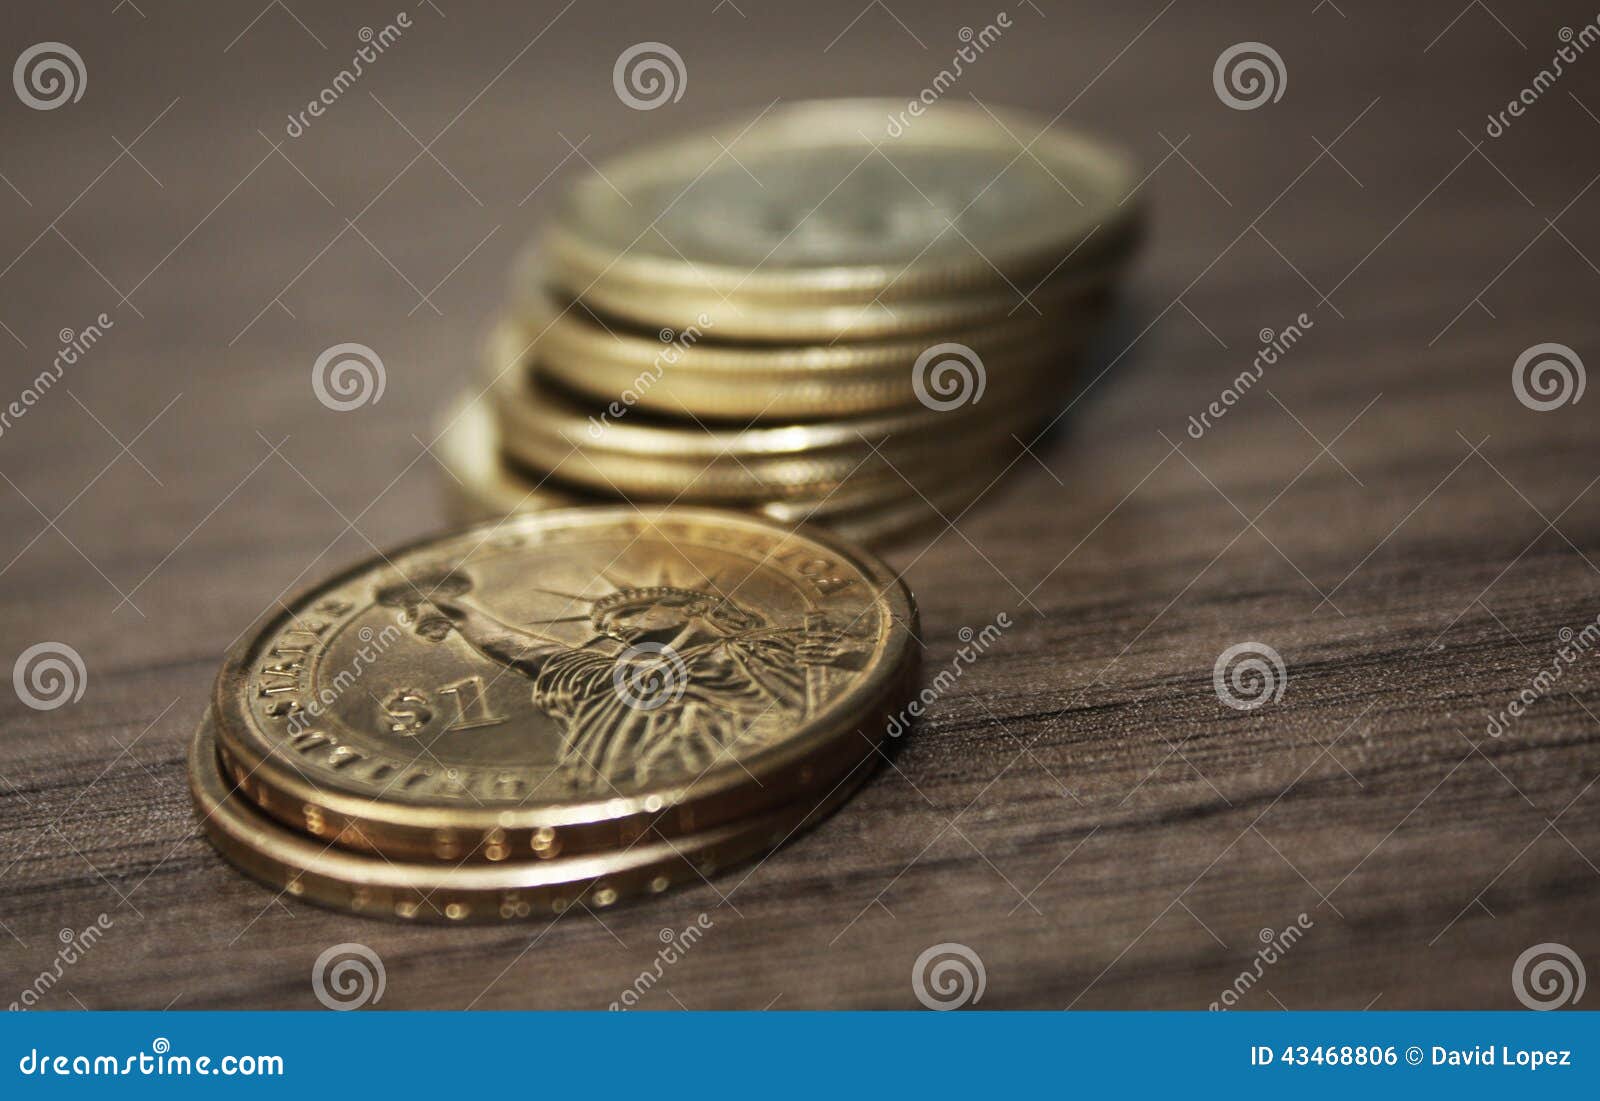 six coins